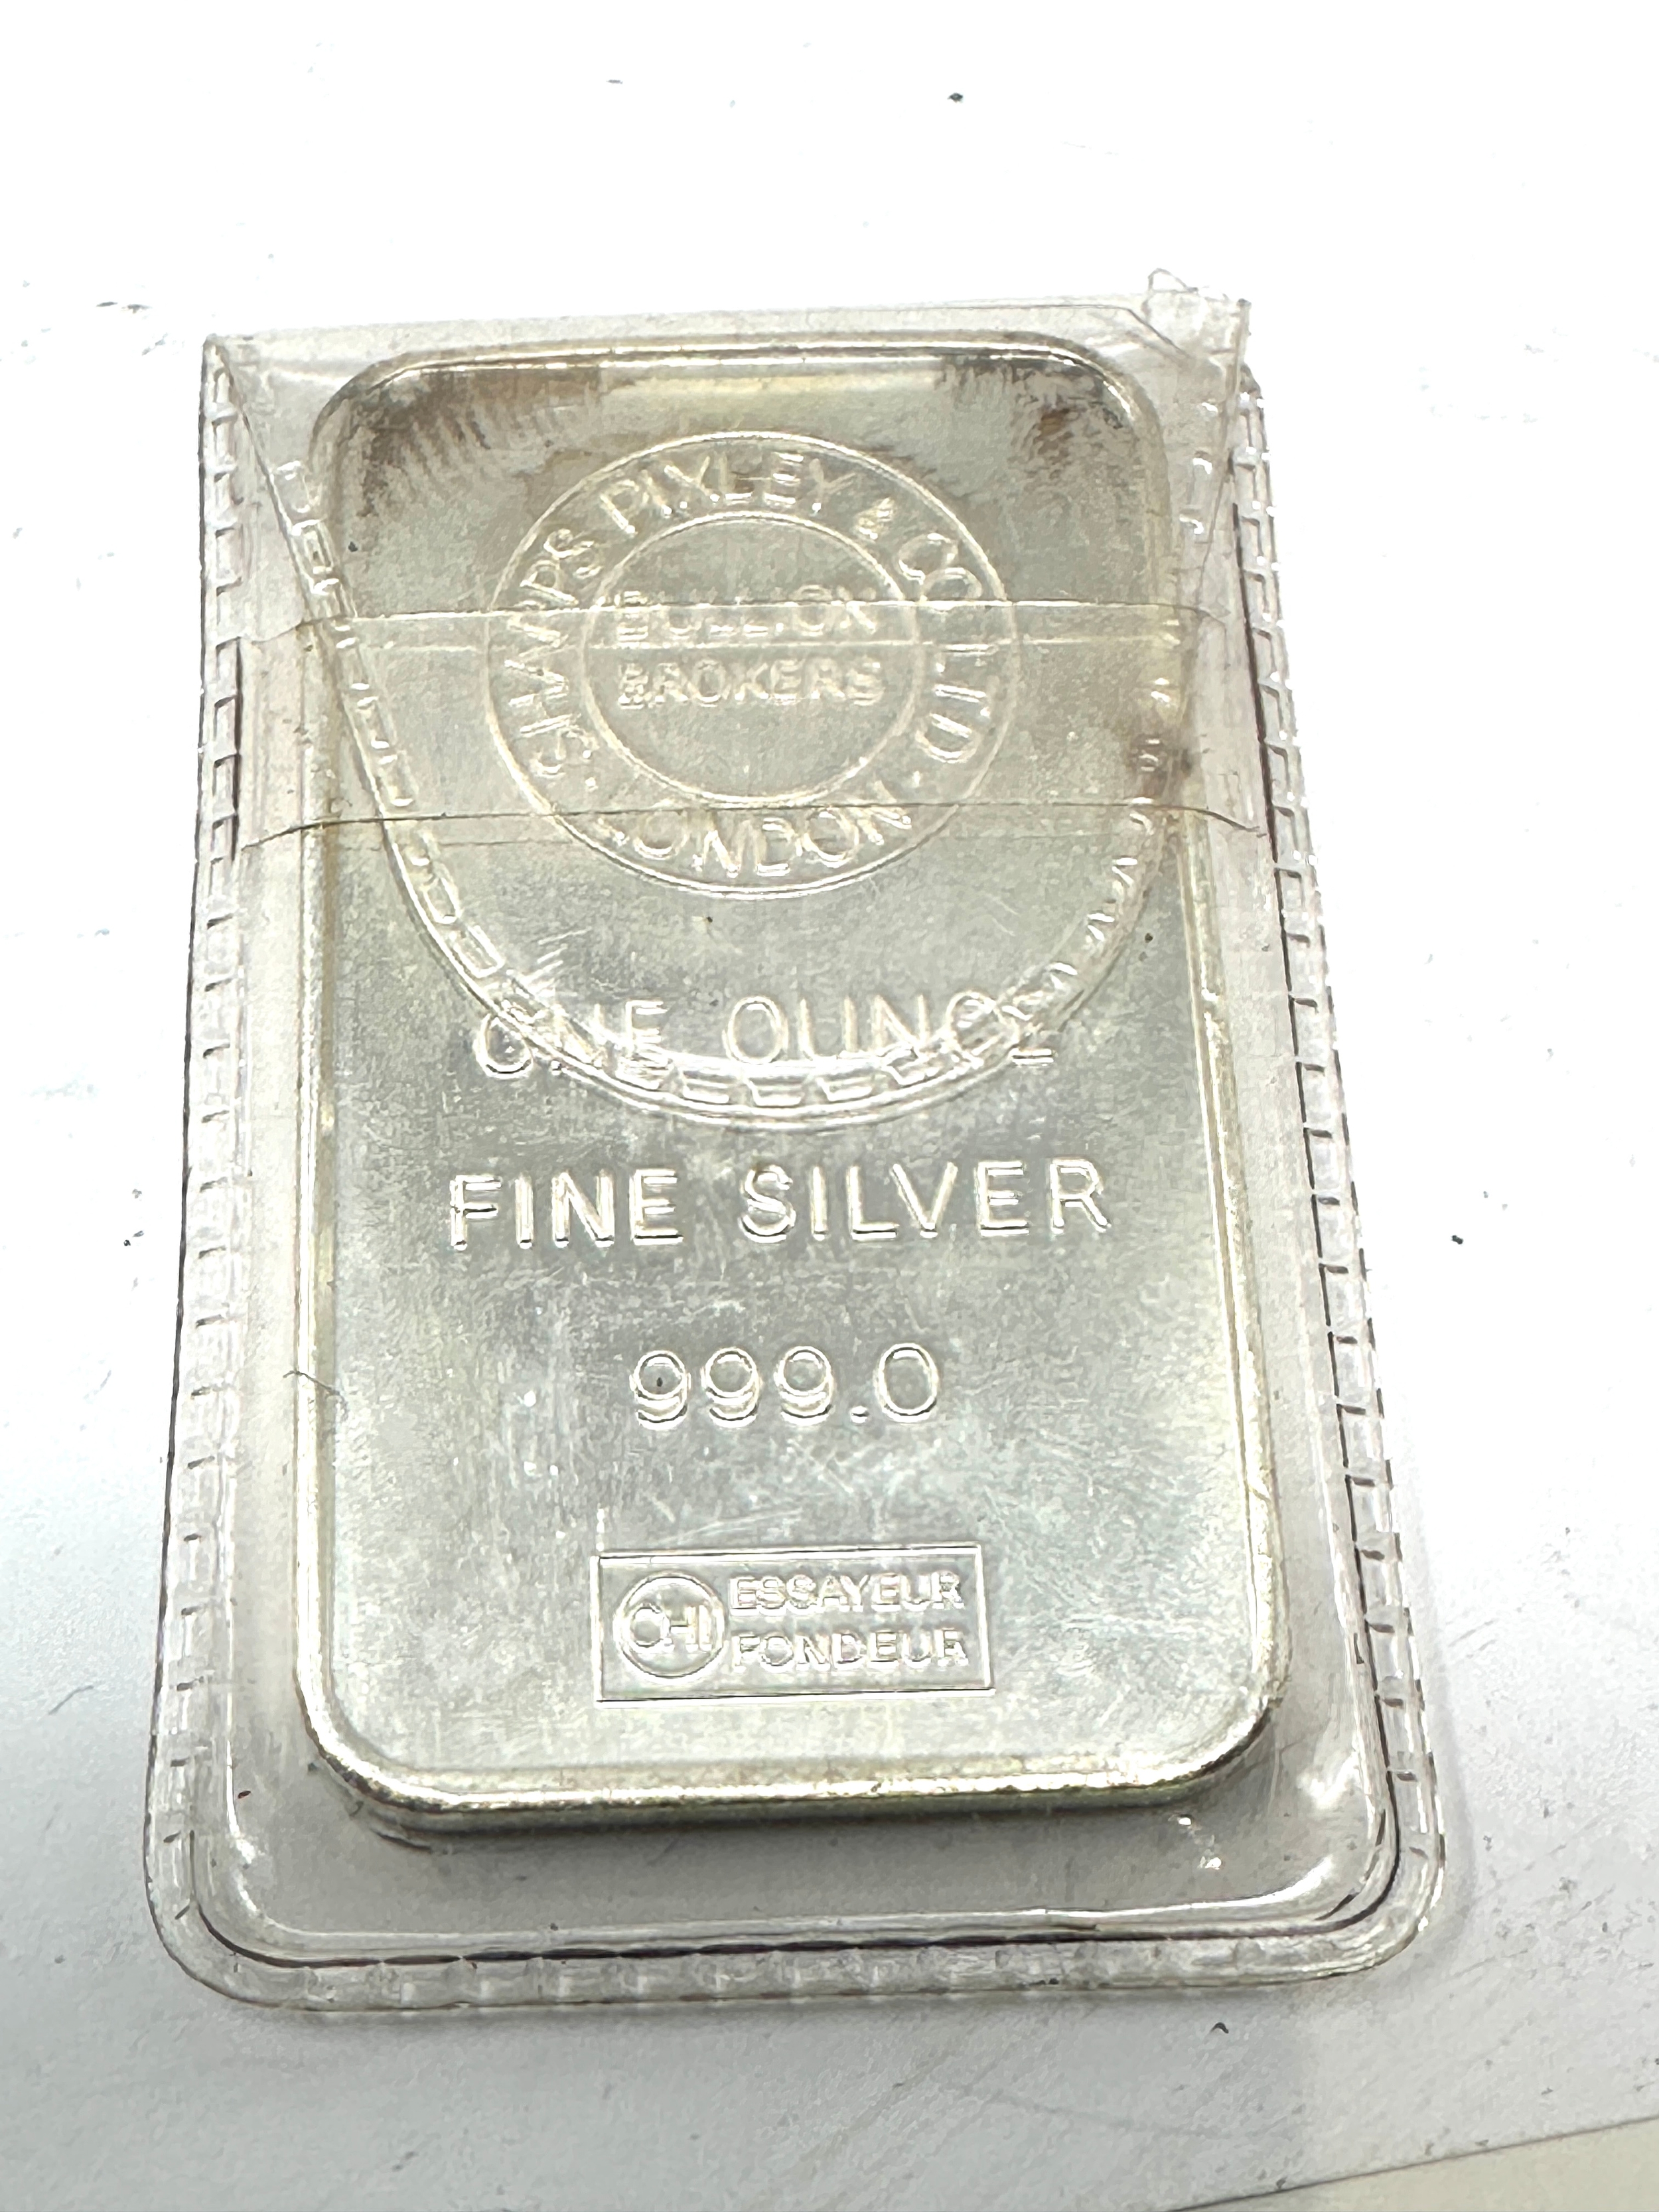 sharps pixley & Co one ounce fine 999.0 silver ingot bar